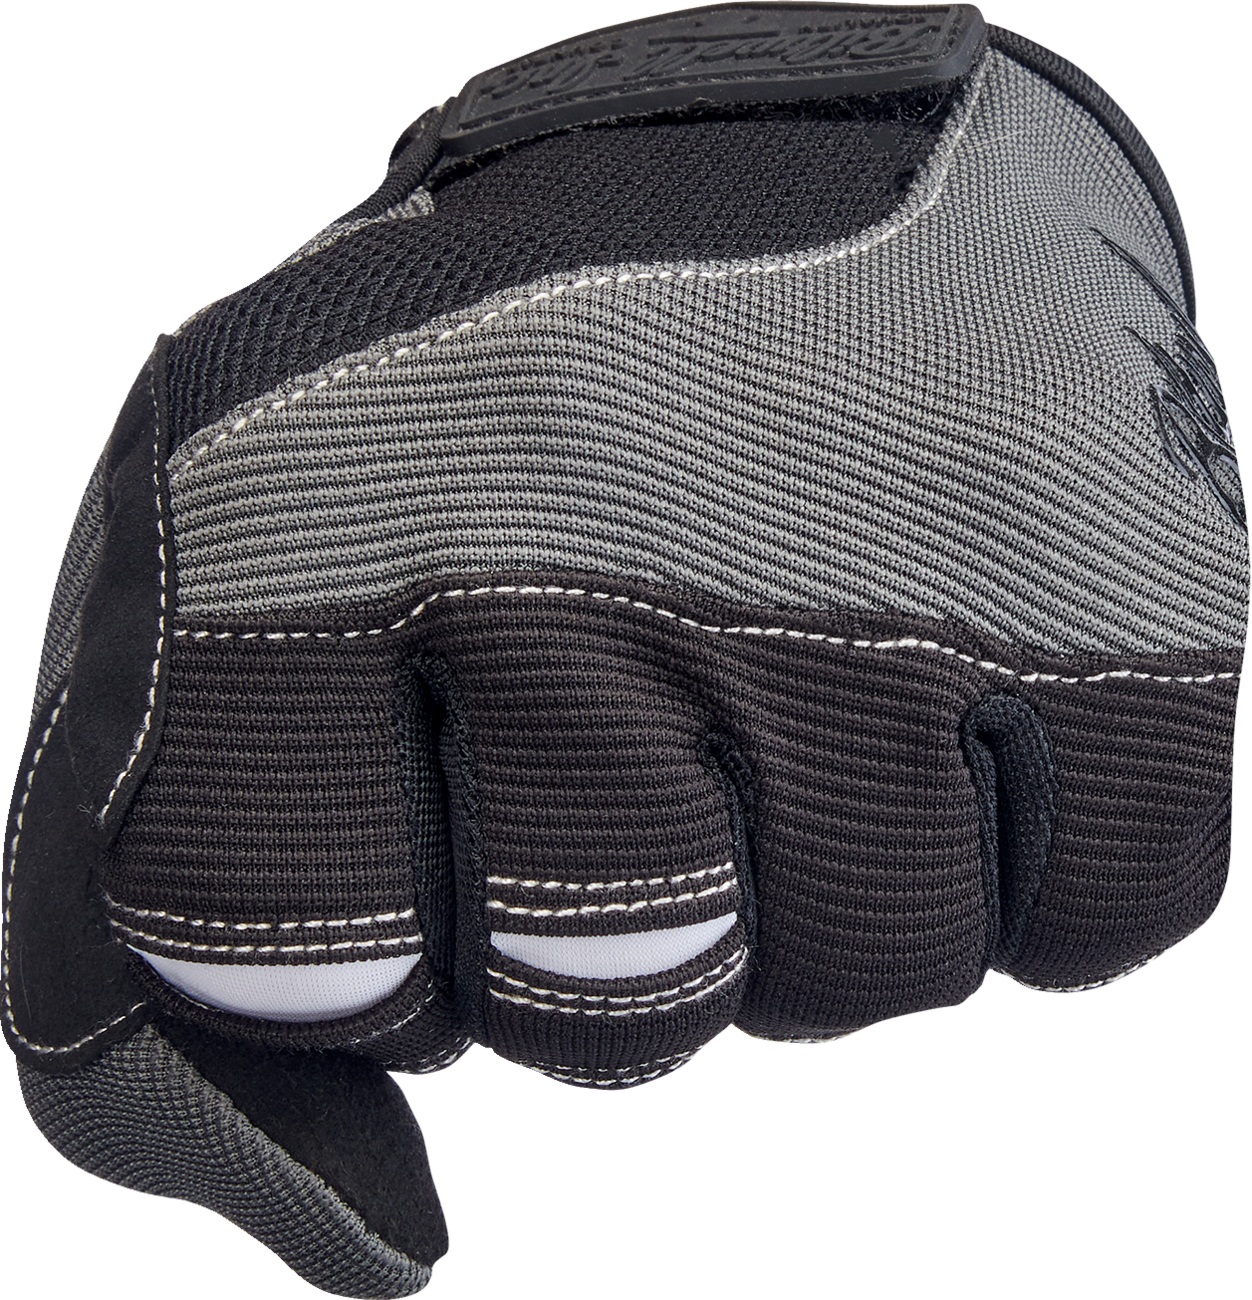 BILTWELL Moto Gloves - Gray/Black - Large 1501-1101-004